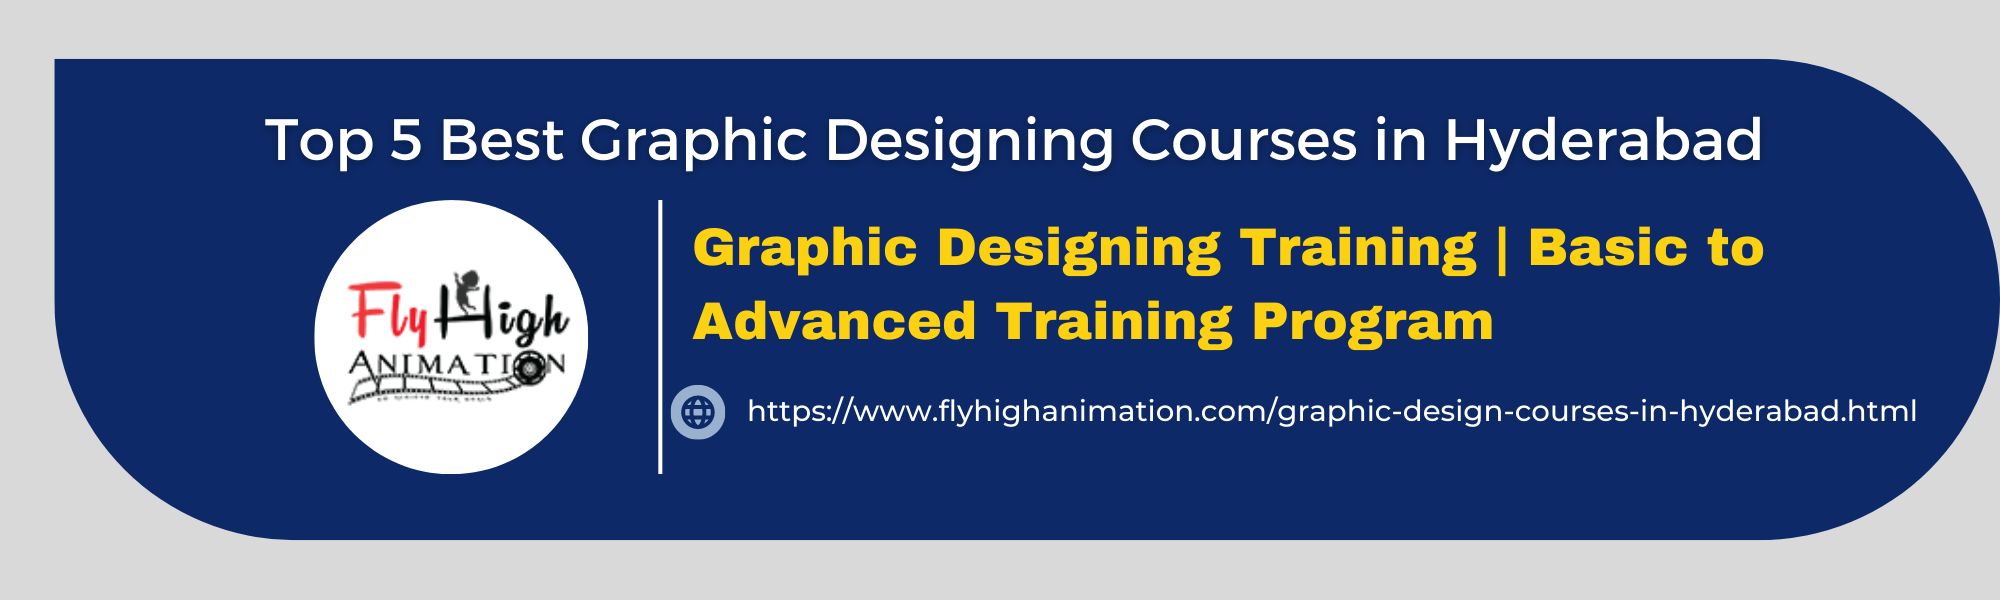 Graphic Design Course in Hyderabad 